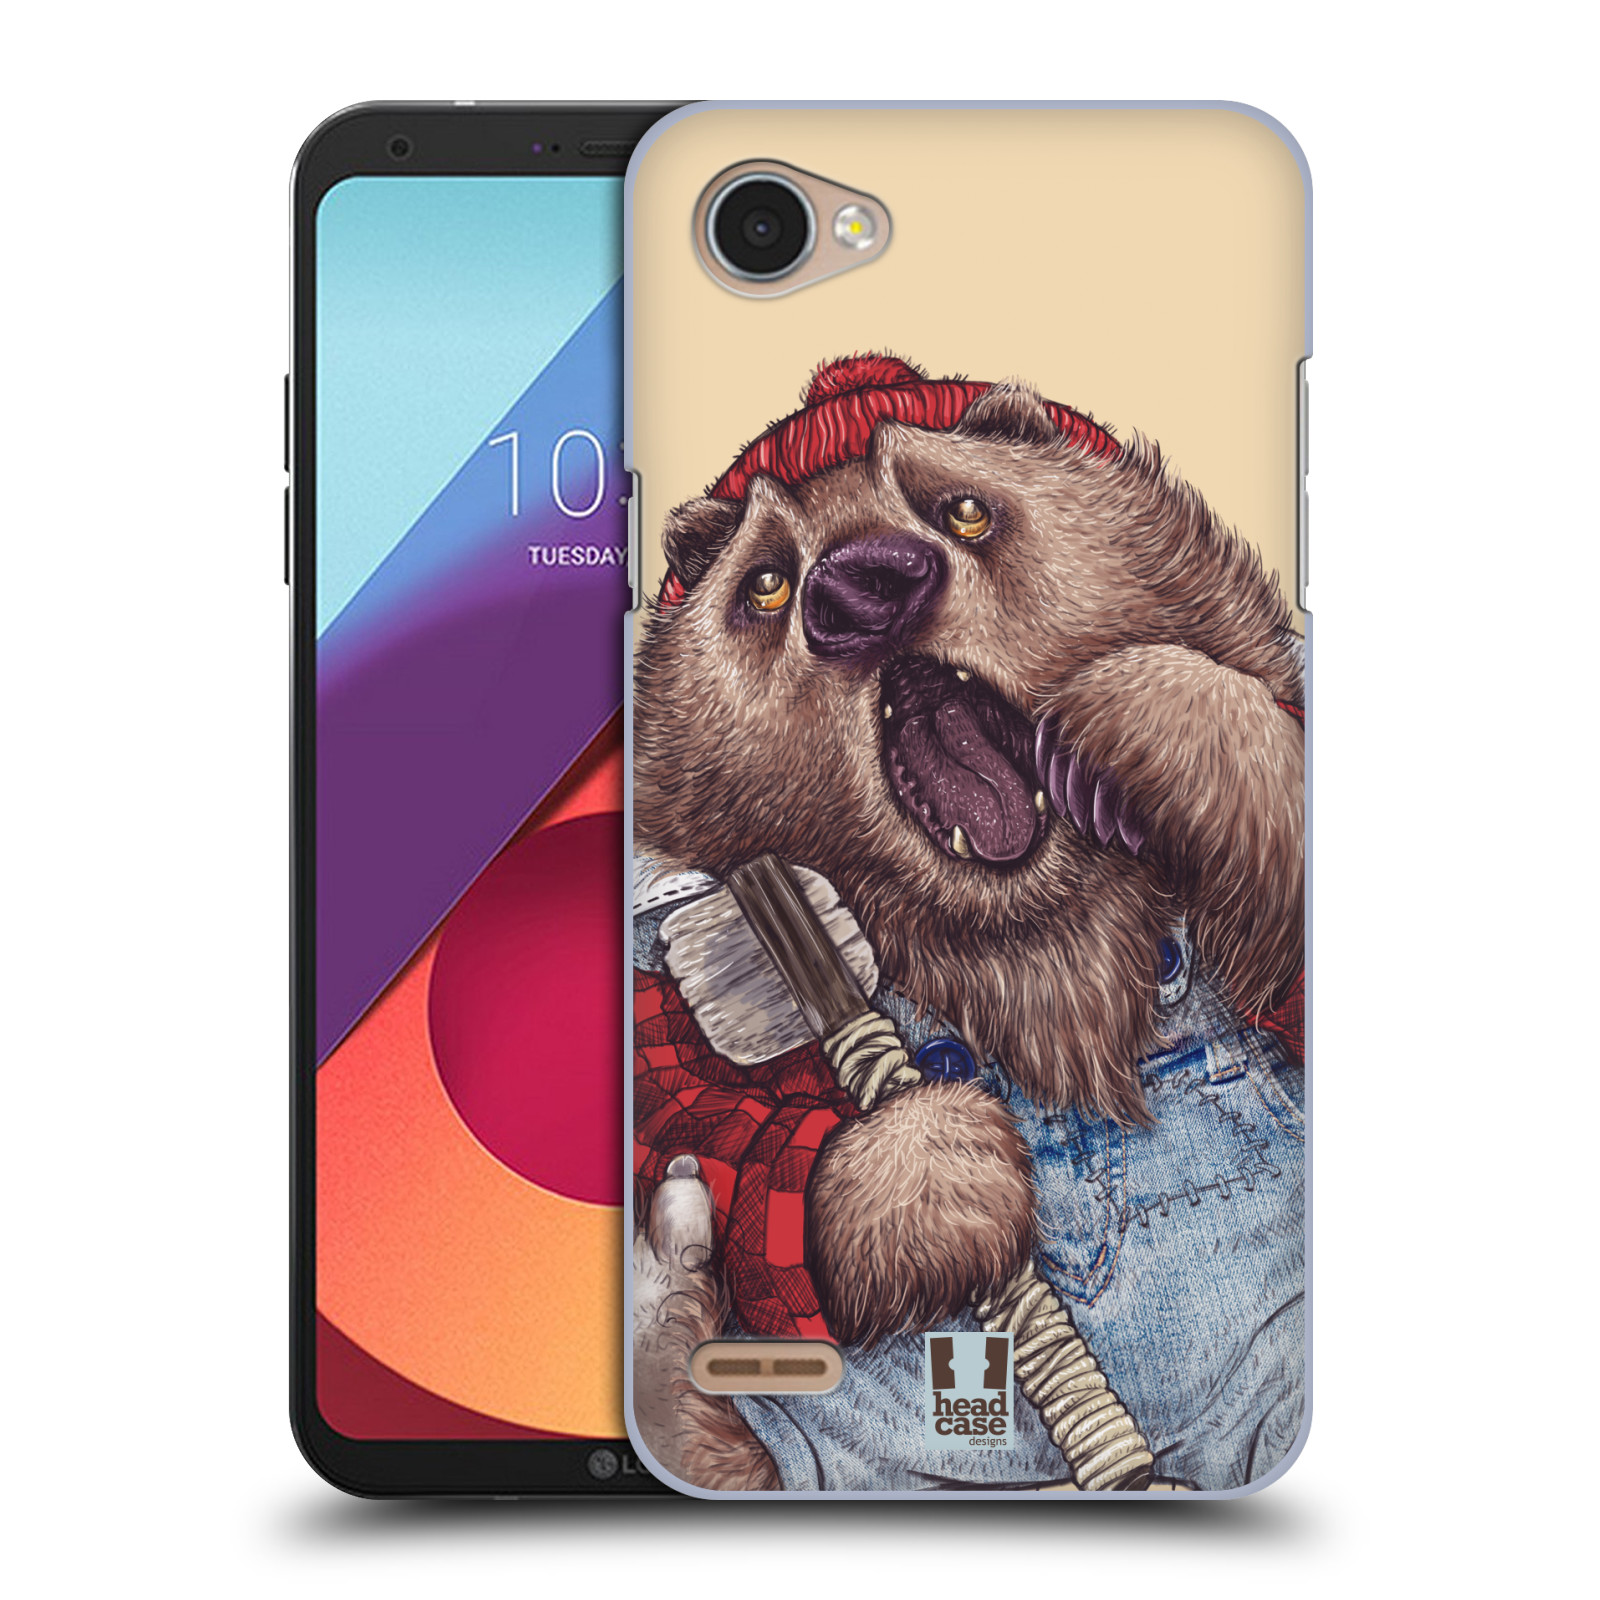 HEAD CASE plastový obal na mobil LG Q6 / Q6 PLUS vzor Kreslená zvířátka medvěd